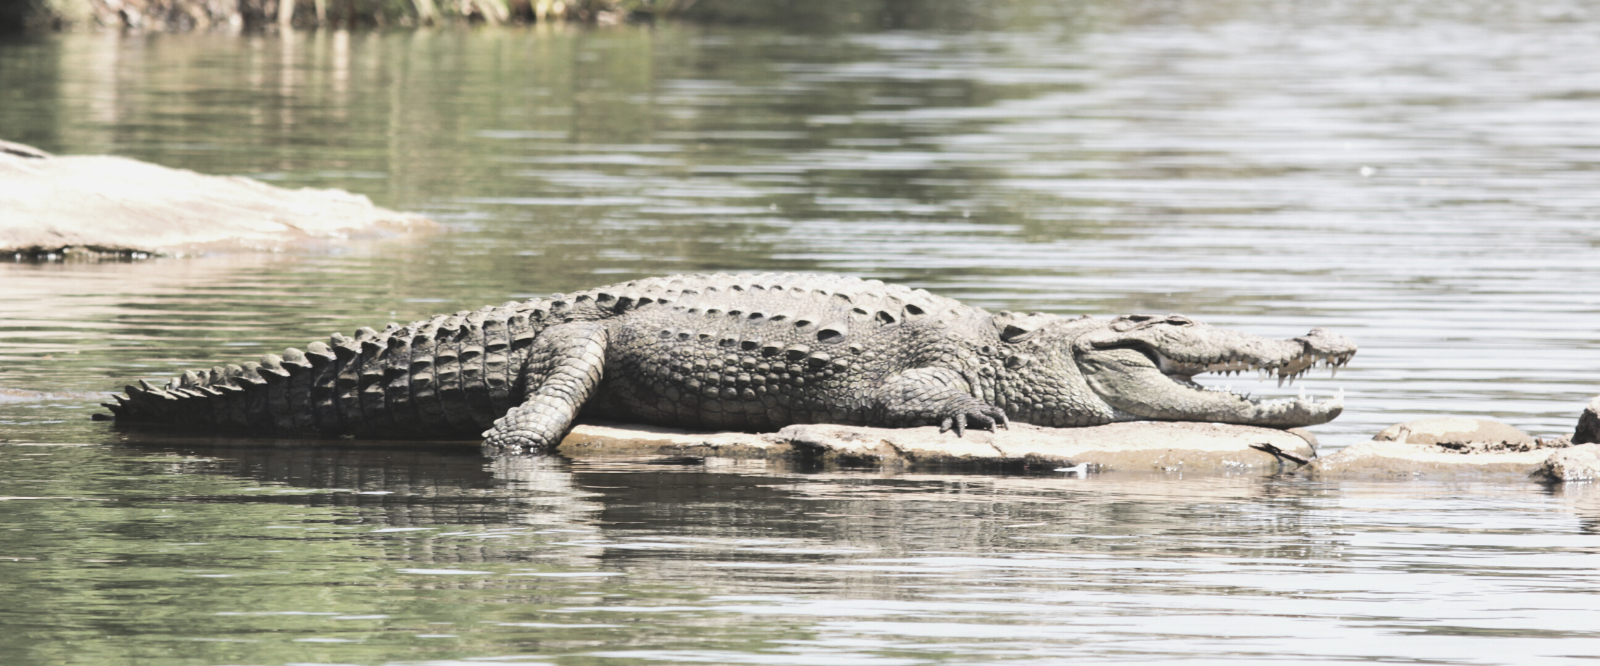 crocodile crossing a river nefertem proverb